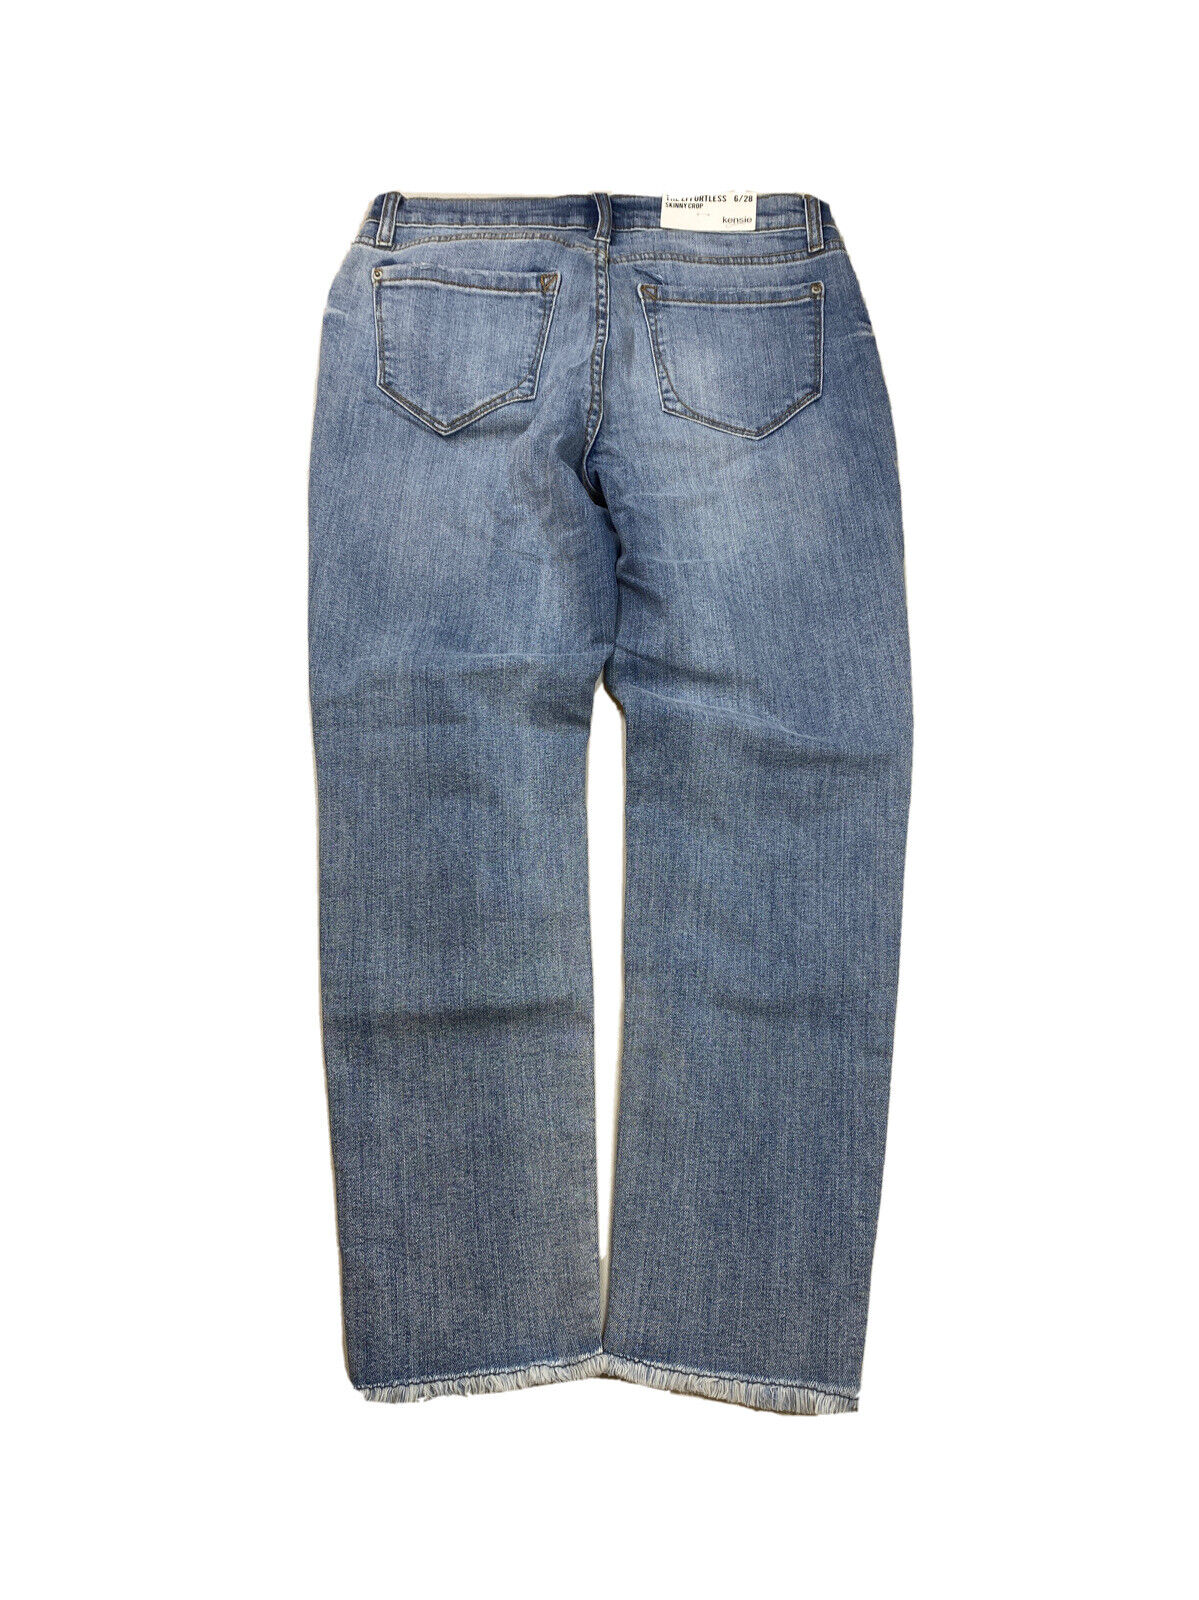 NEW Kensie Women's Light Wash Effortless Skinny Crop Jeans - 6/28